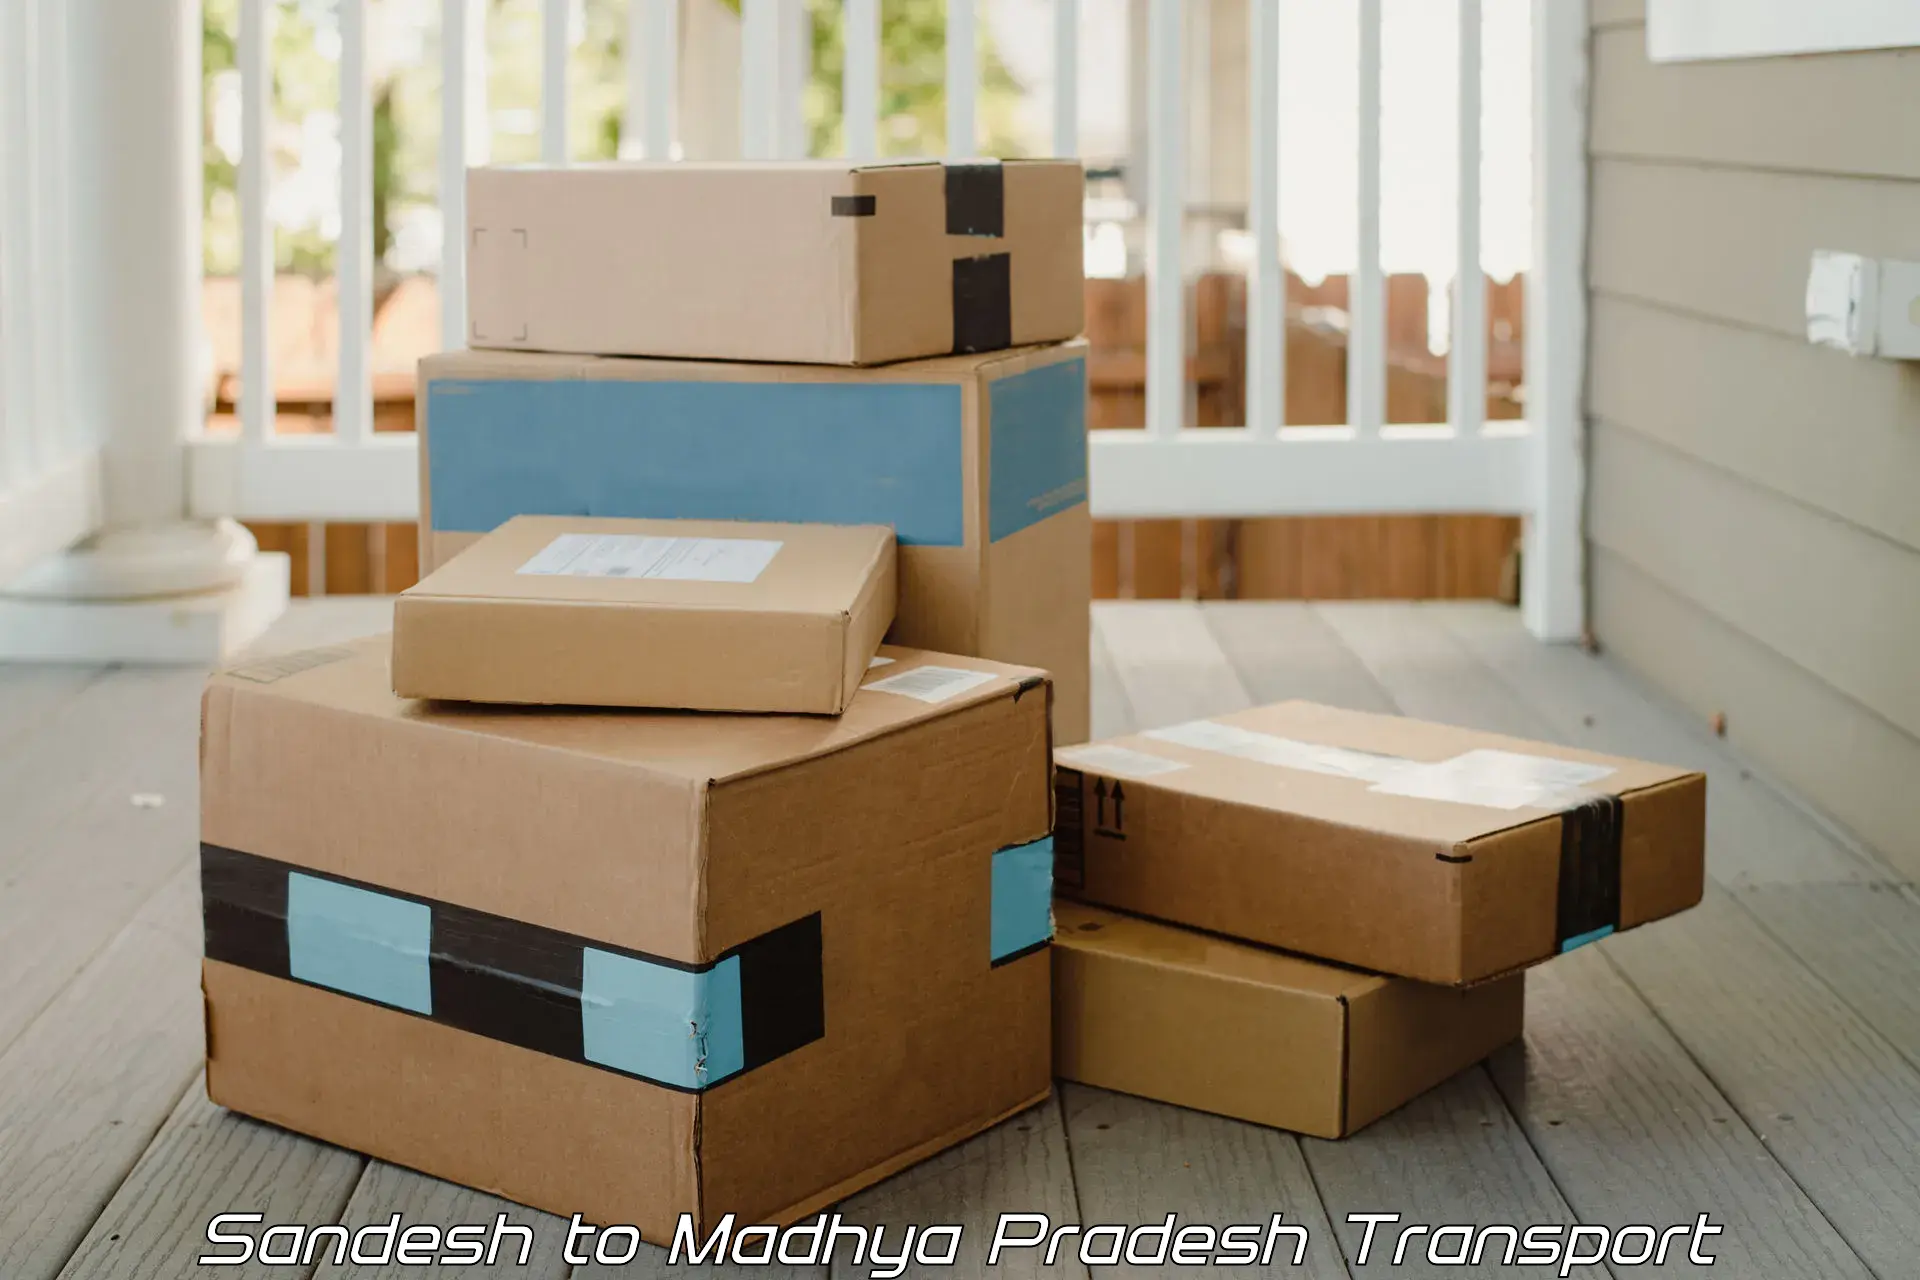 Goods delivery service Sandesh to Madhya Pradesh